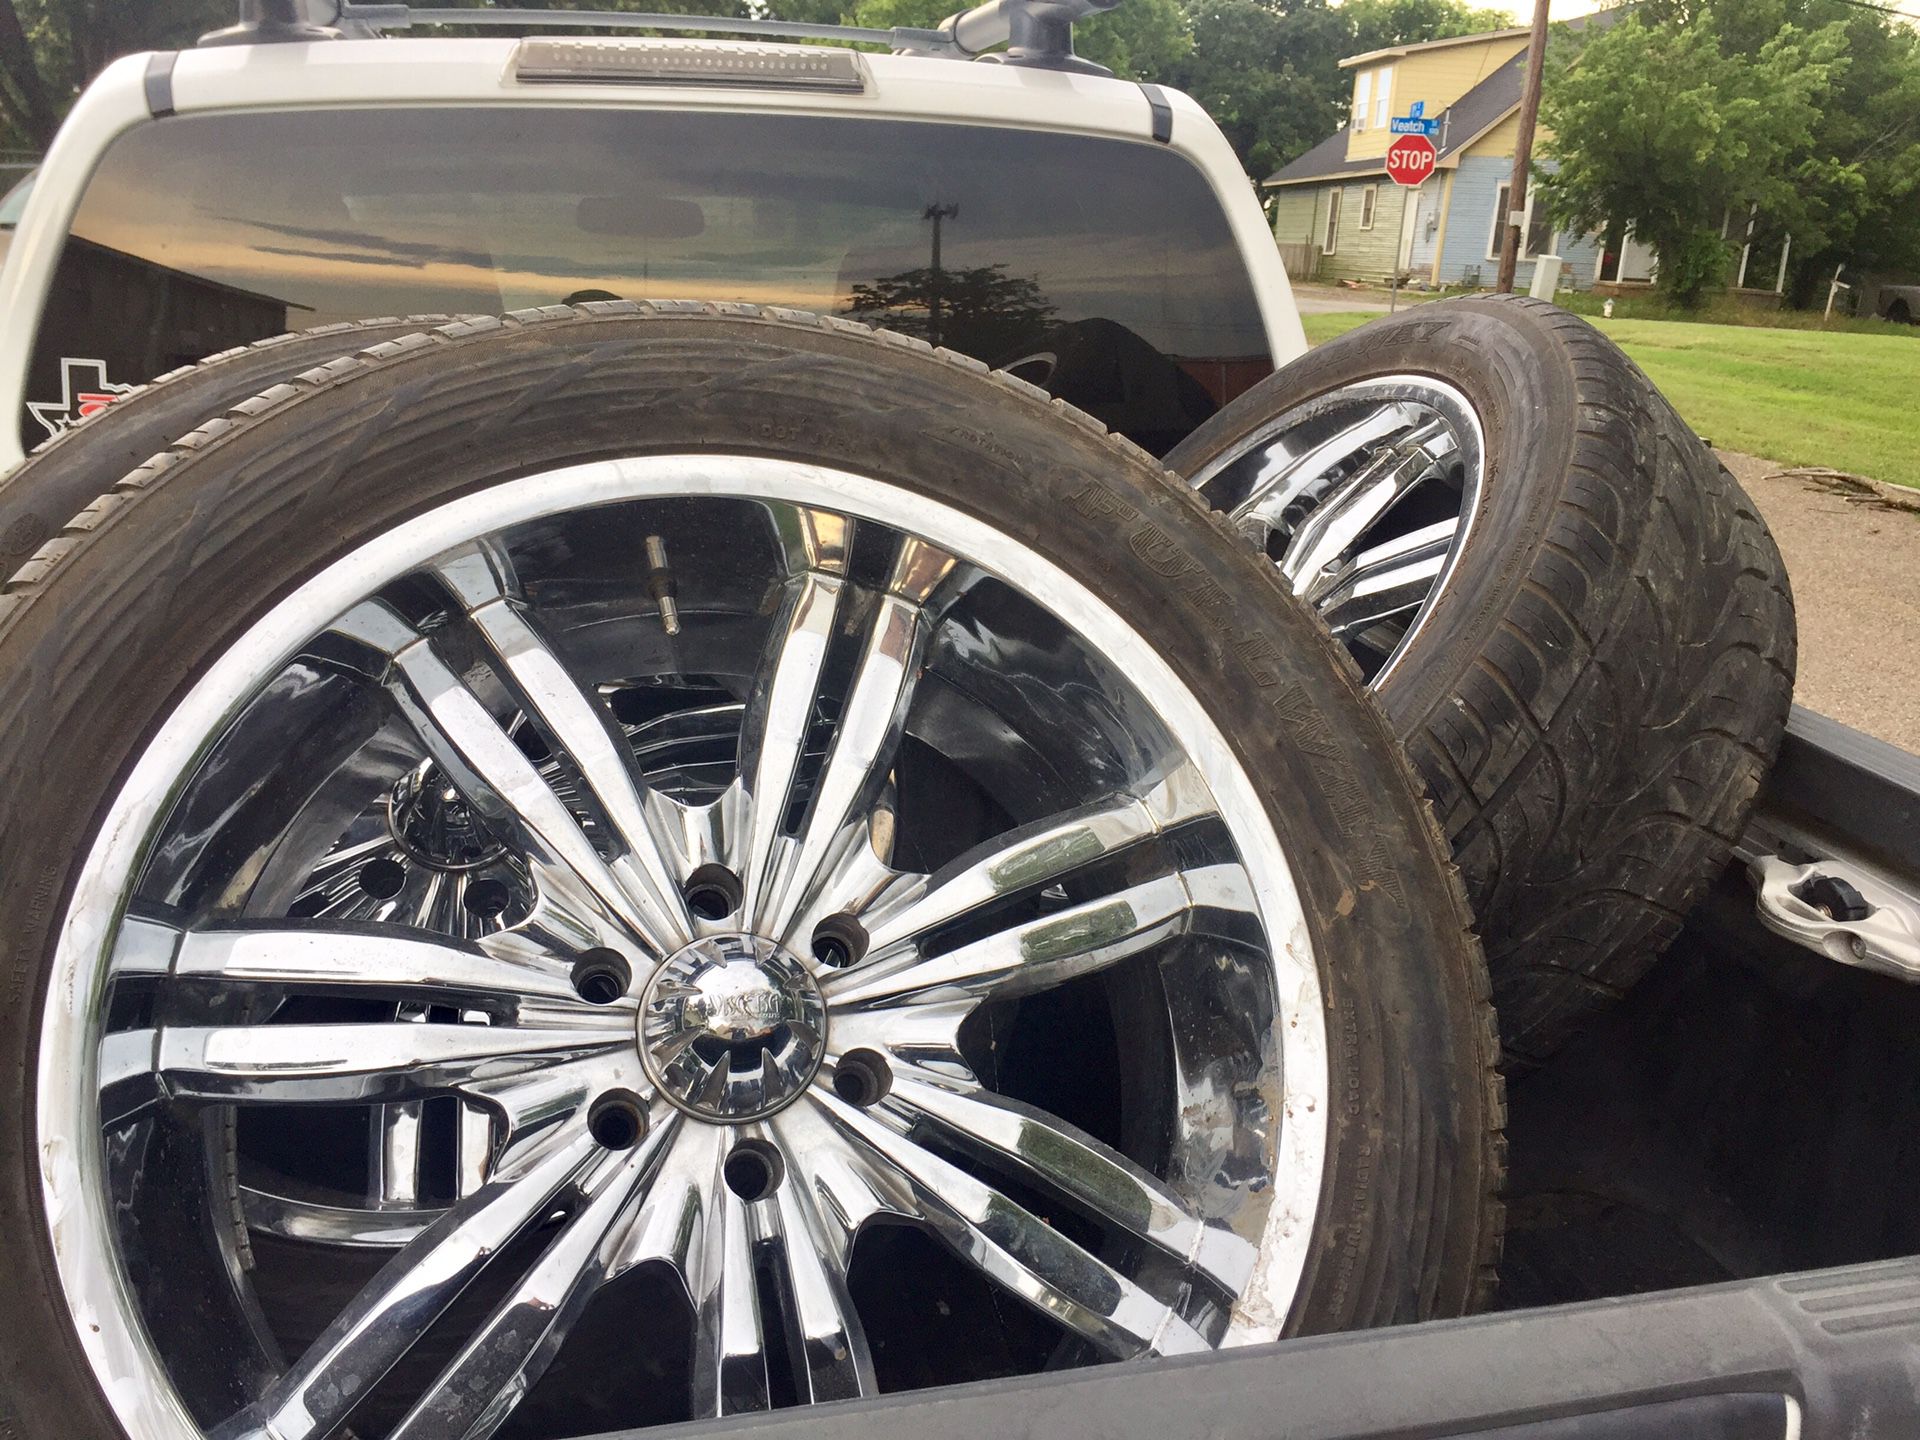 22” Chrome Wheels & Tires!! $600 OBO